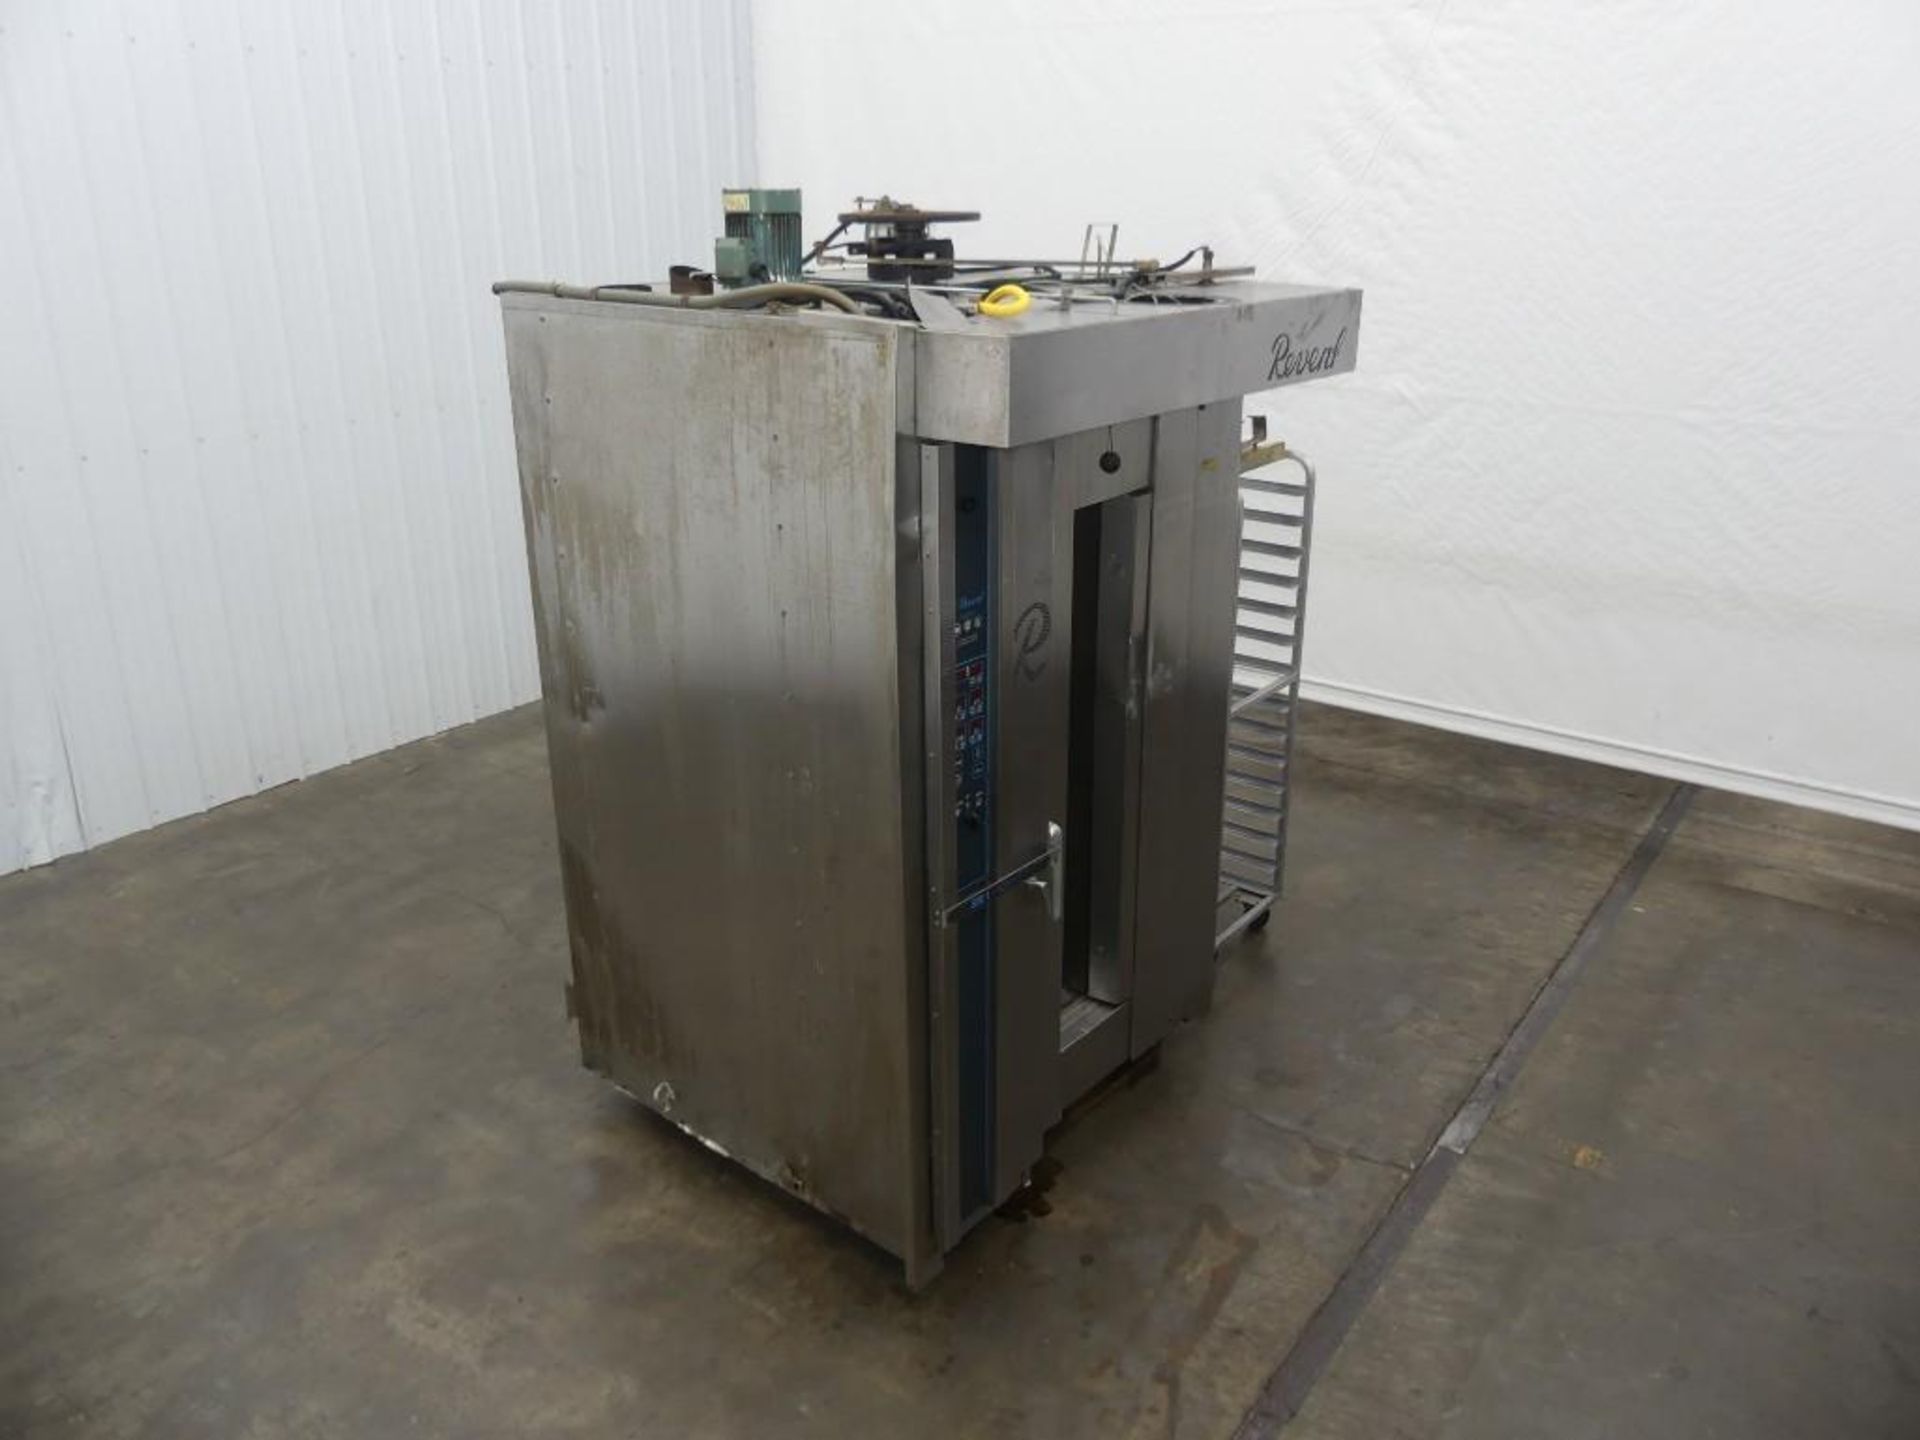 Revent 626 G DG 149,000 BTU Natural Gas-Fired Single Rack Oven - Image 20 of 28